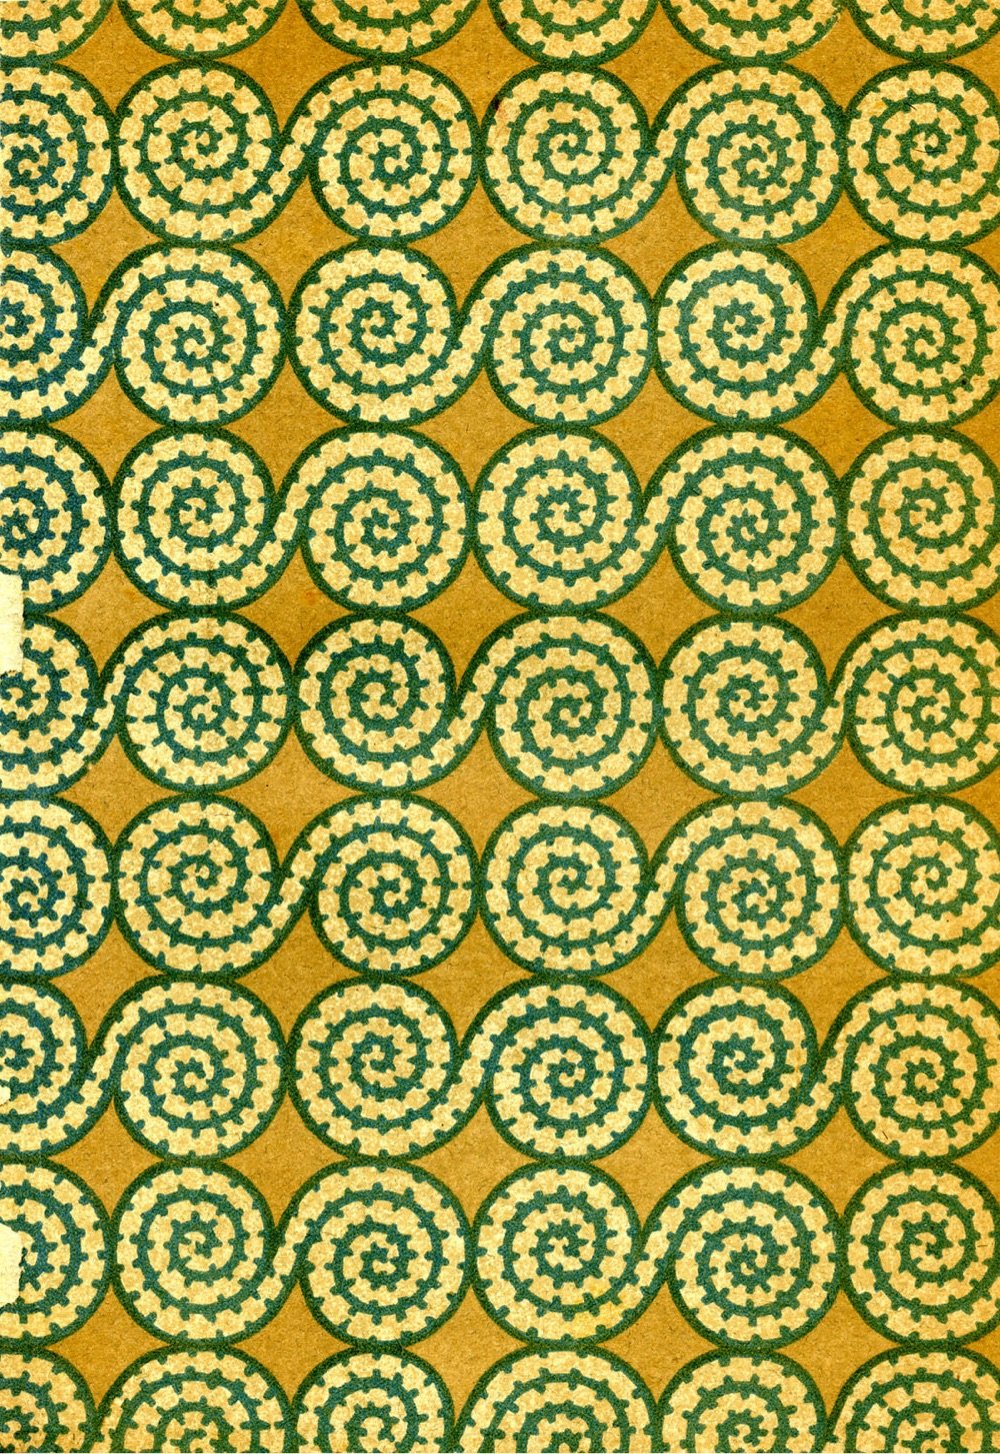 a pattern of light green spirals on an orange background